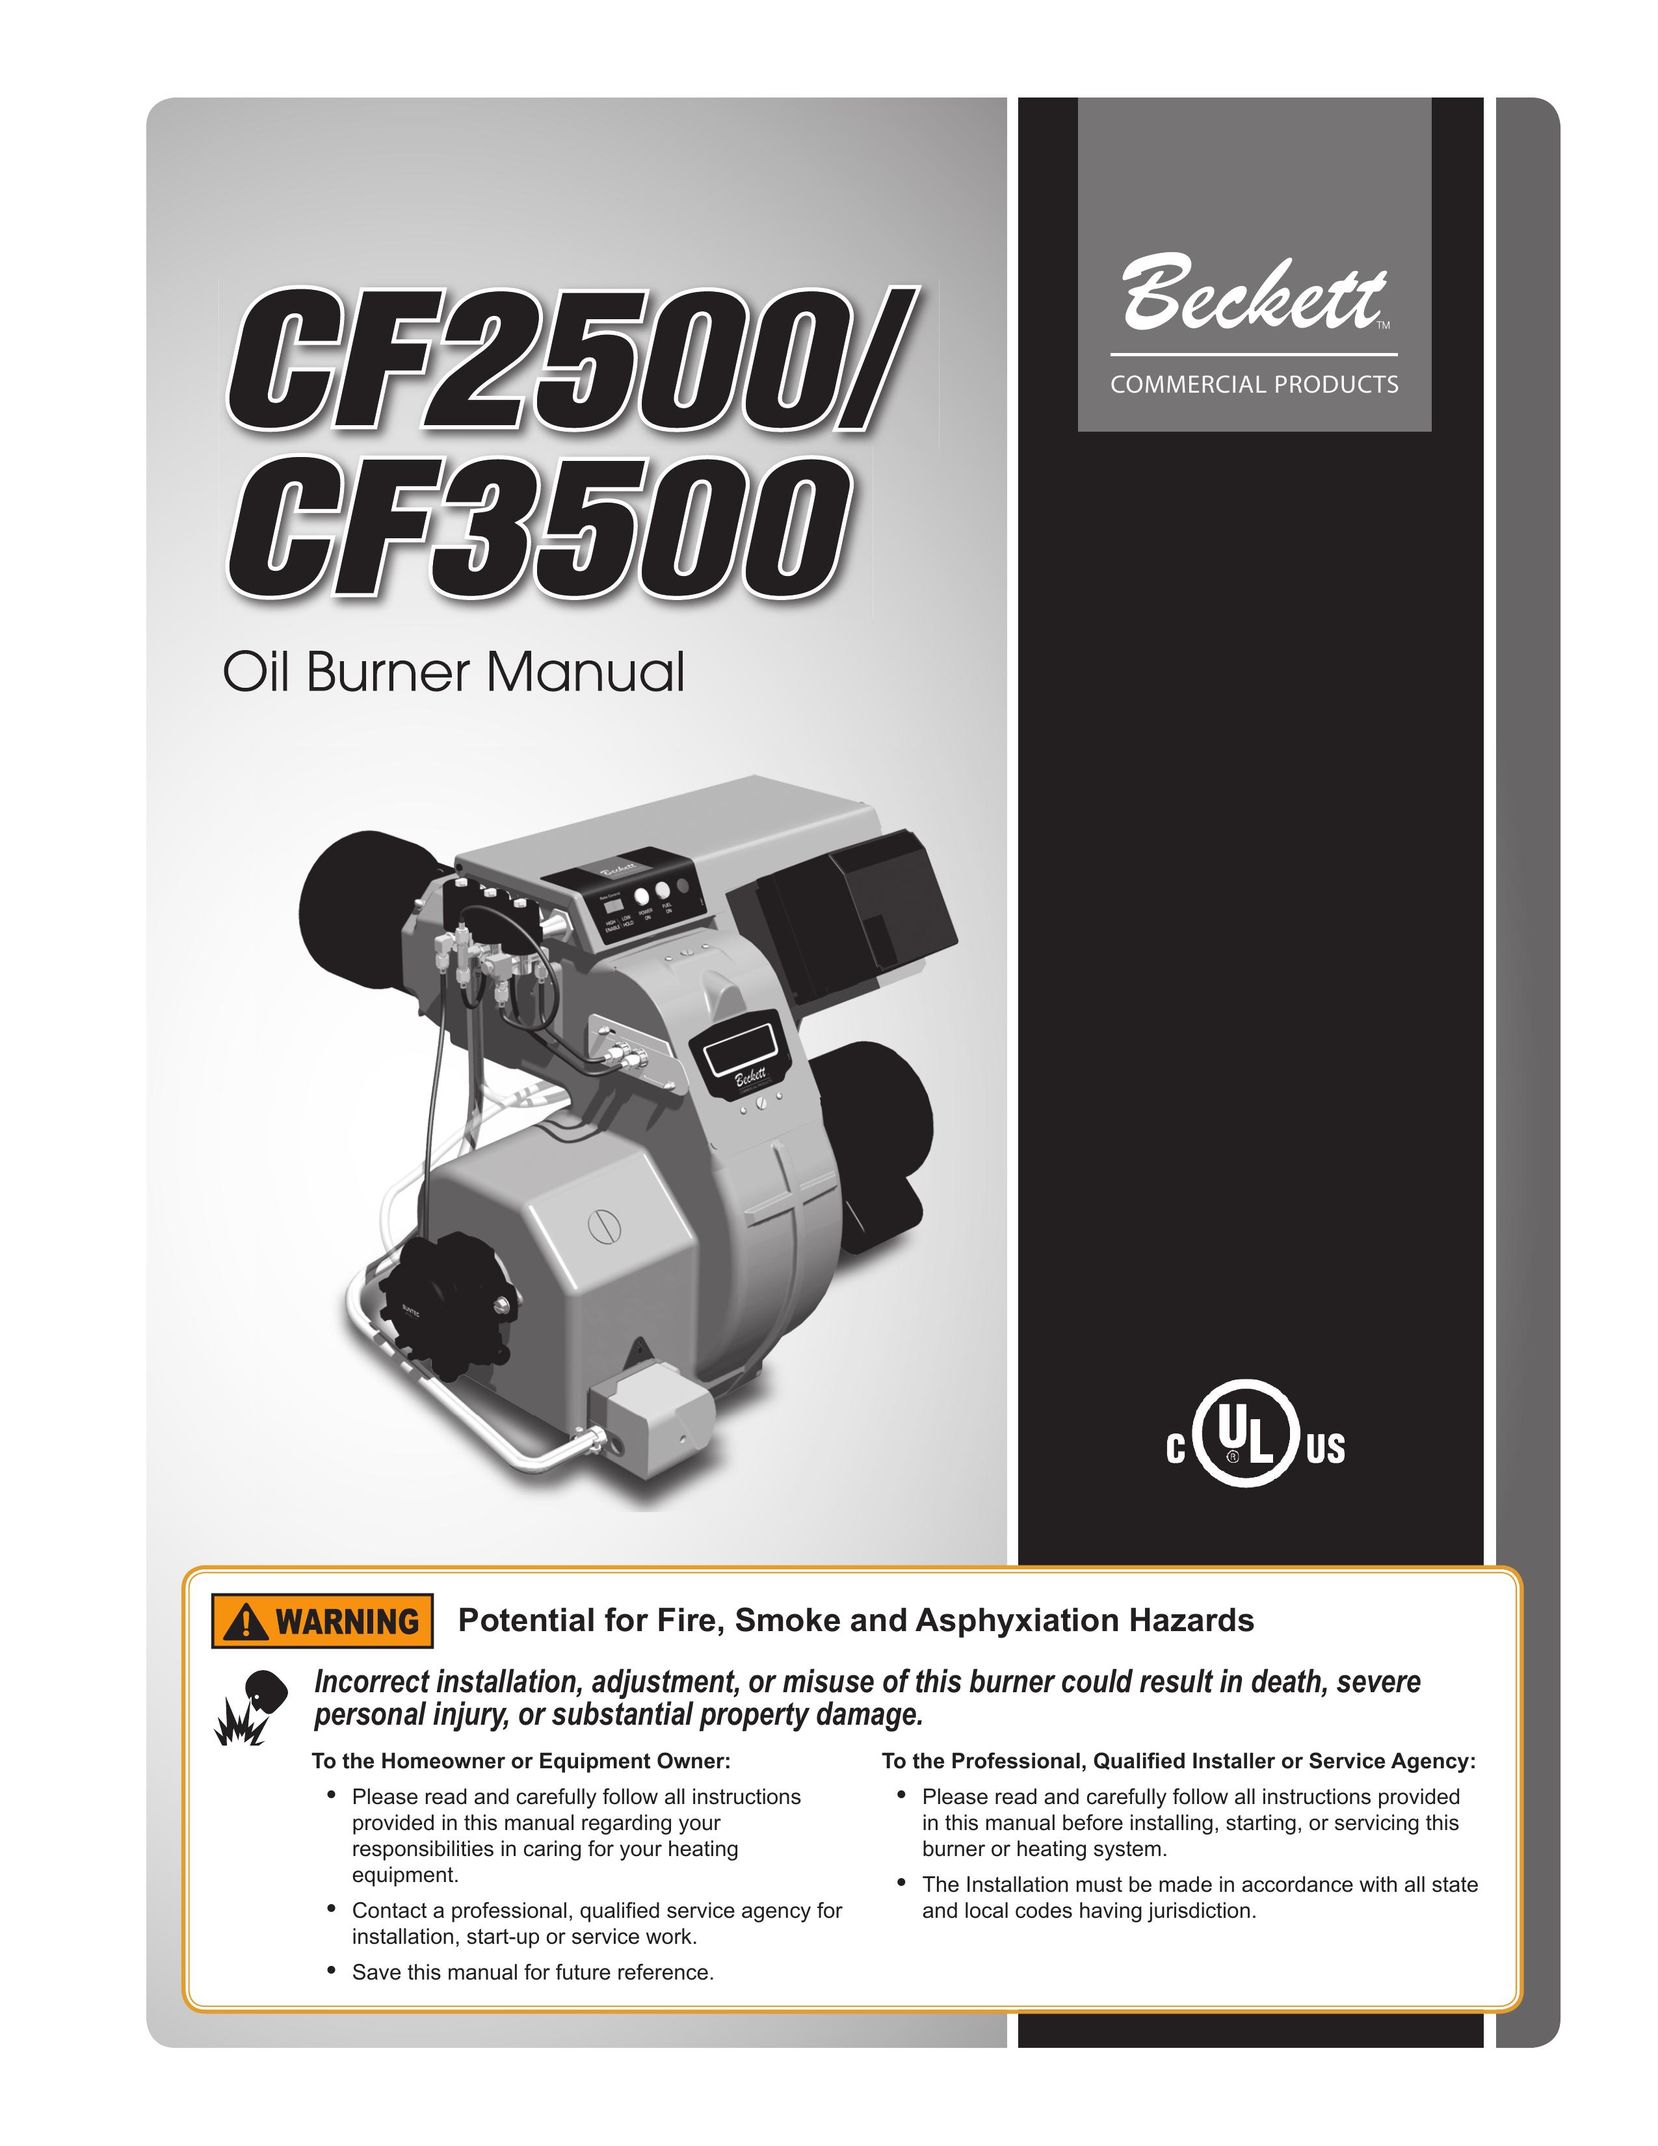 Beckett CF2500 Burner User Manual